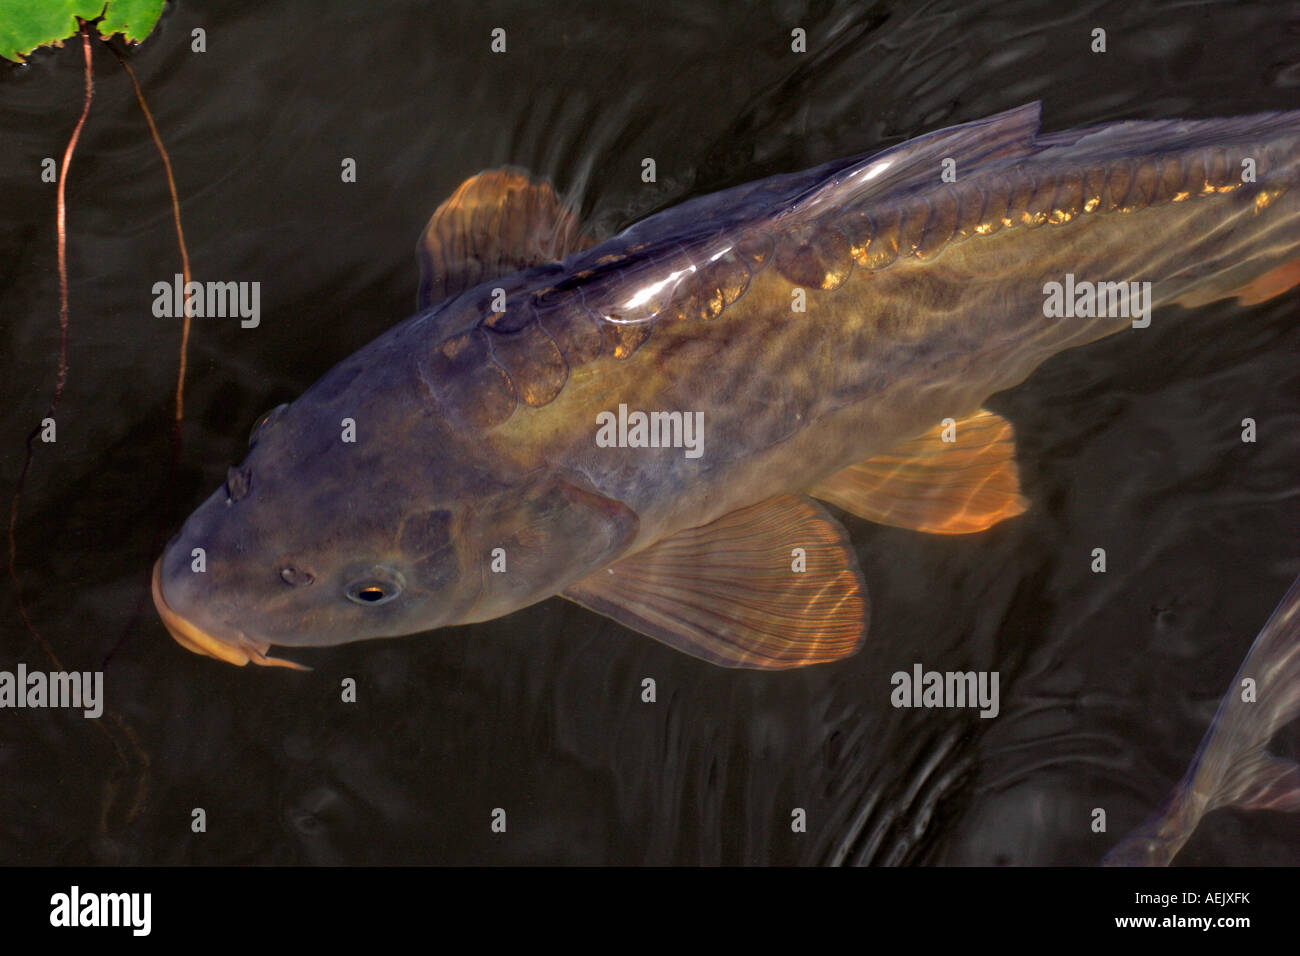 Carpa a nuotare in acqua - carpa comune - europeo carpa (Cyprinus carpio) Foto Stock